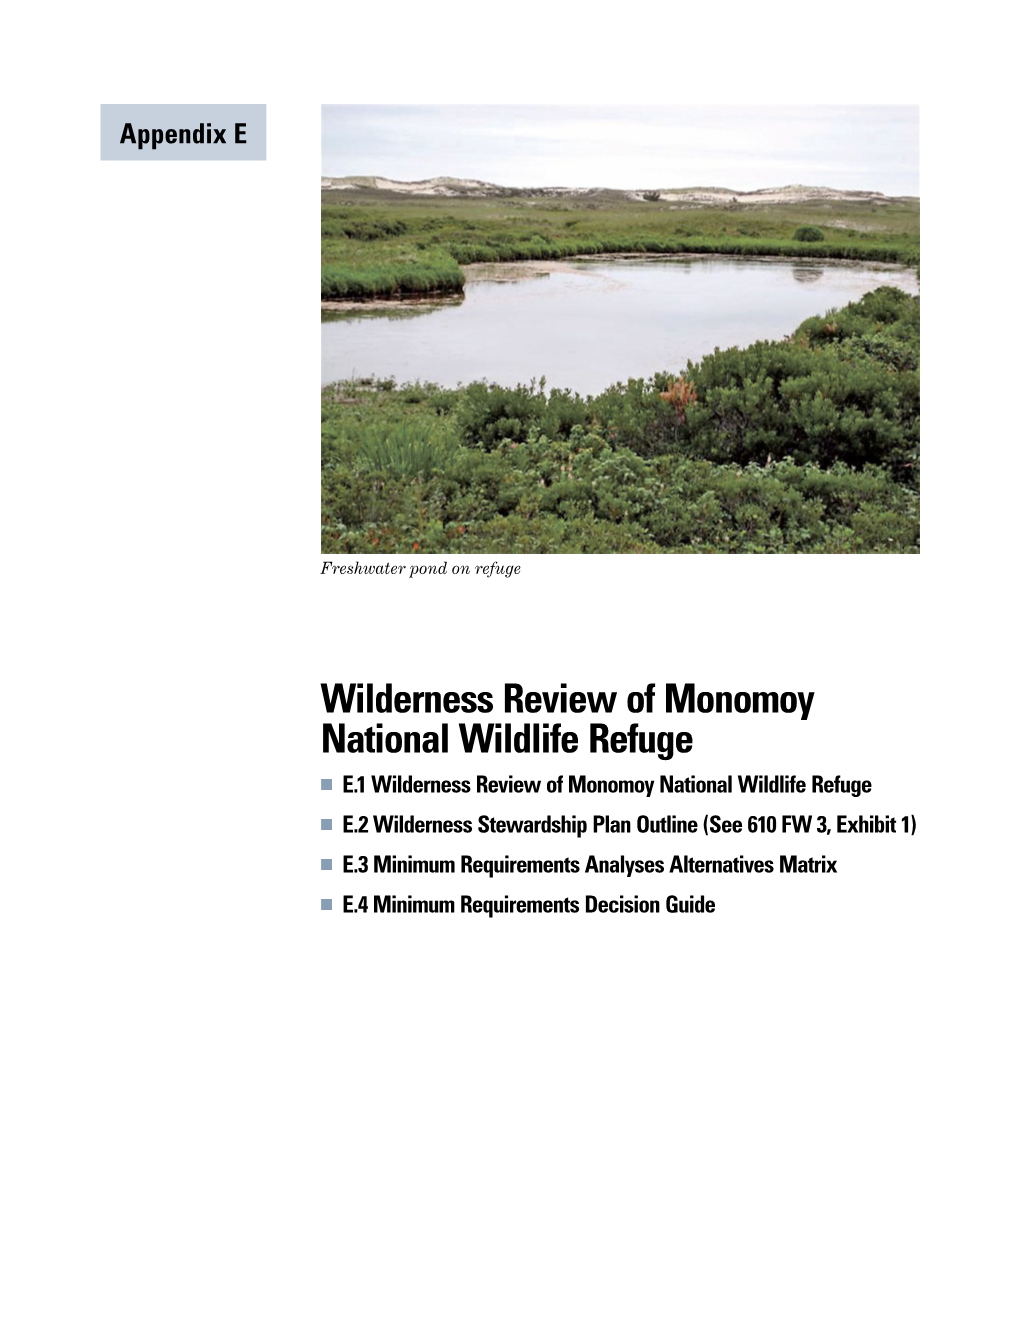 Wilderness Review of Monomoy National Wildlife Refuge